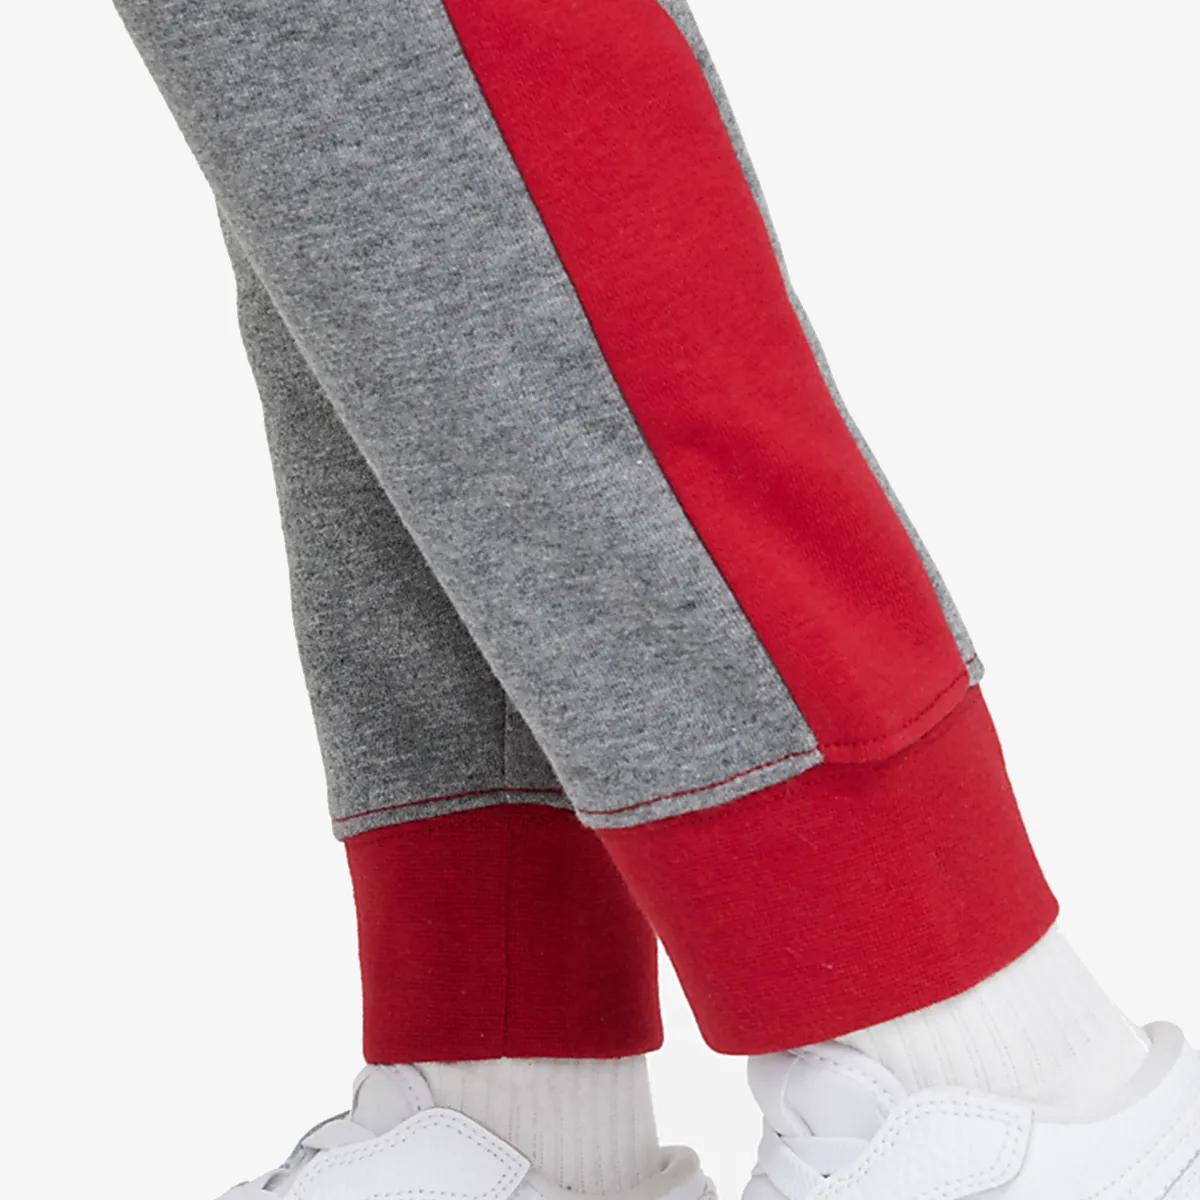 Nike Trening Jordan Jumpman Fleece 